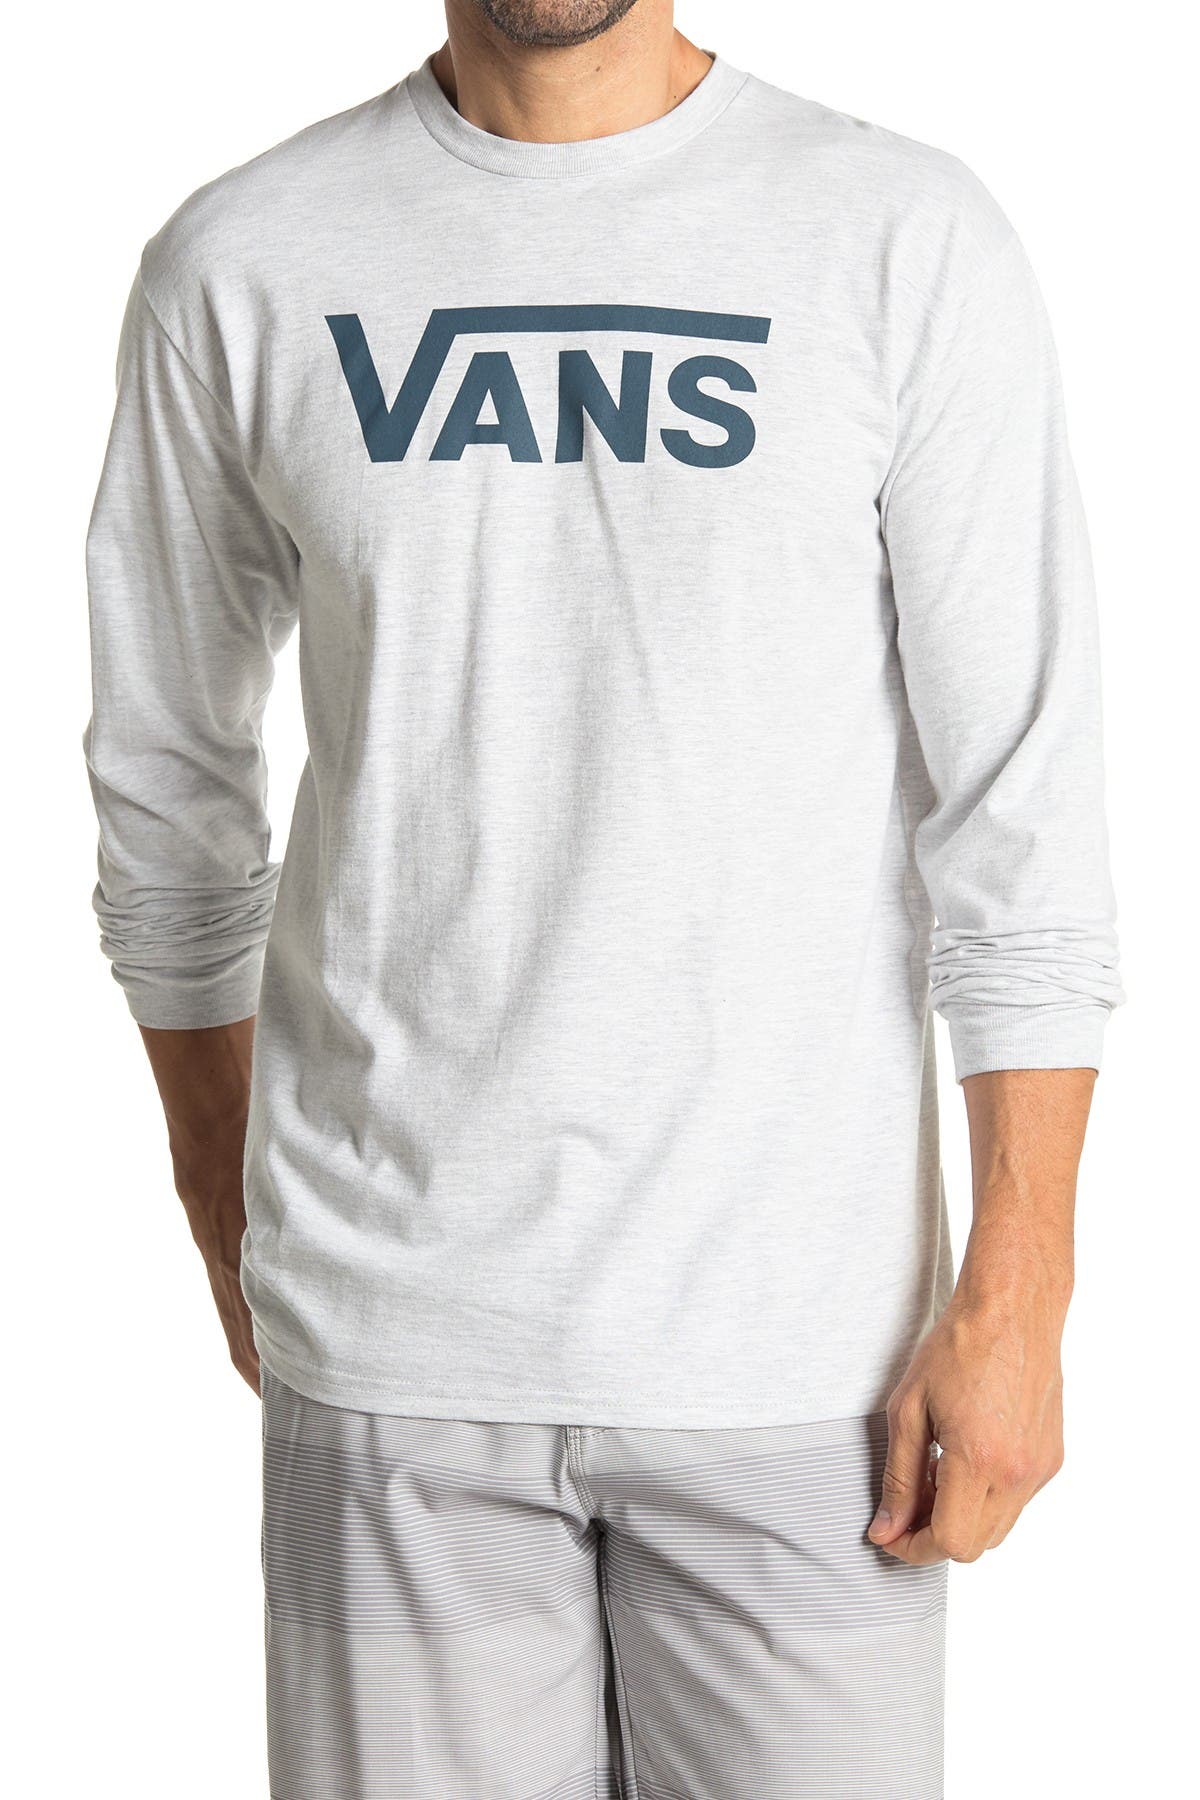 vans classic long sleeve t shirt